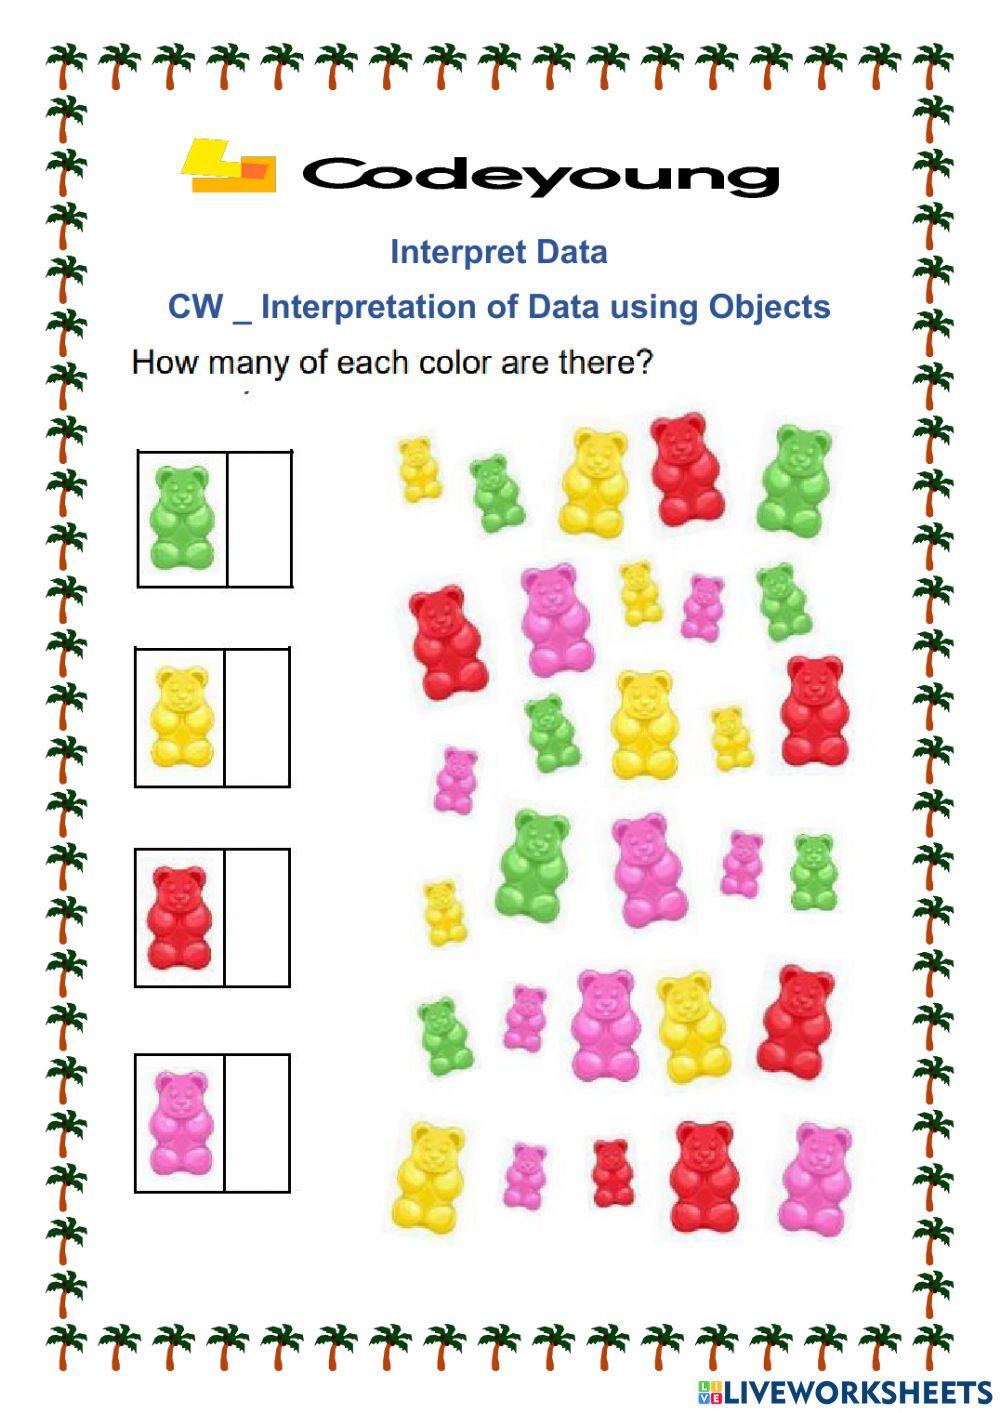 Interpretation of Data using Objects